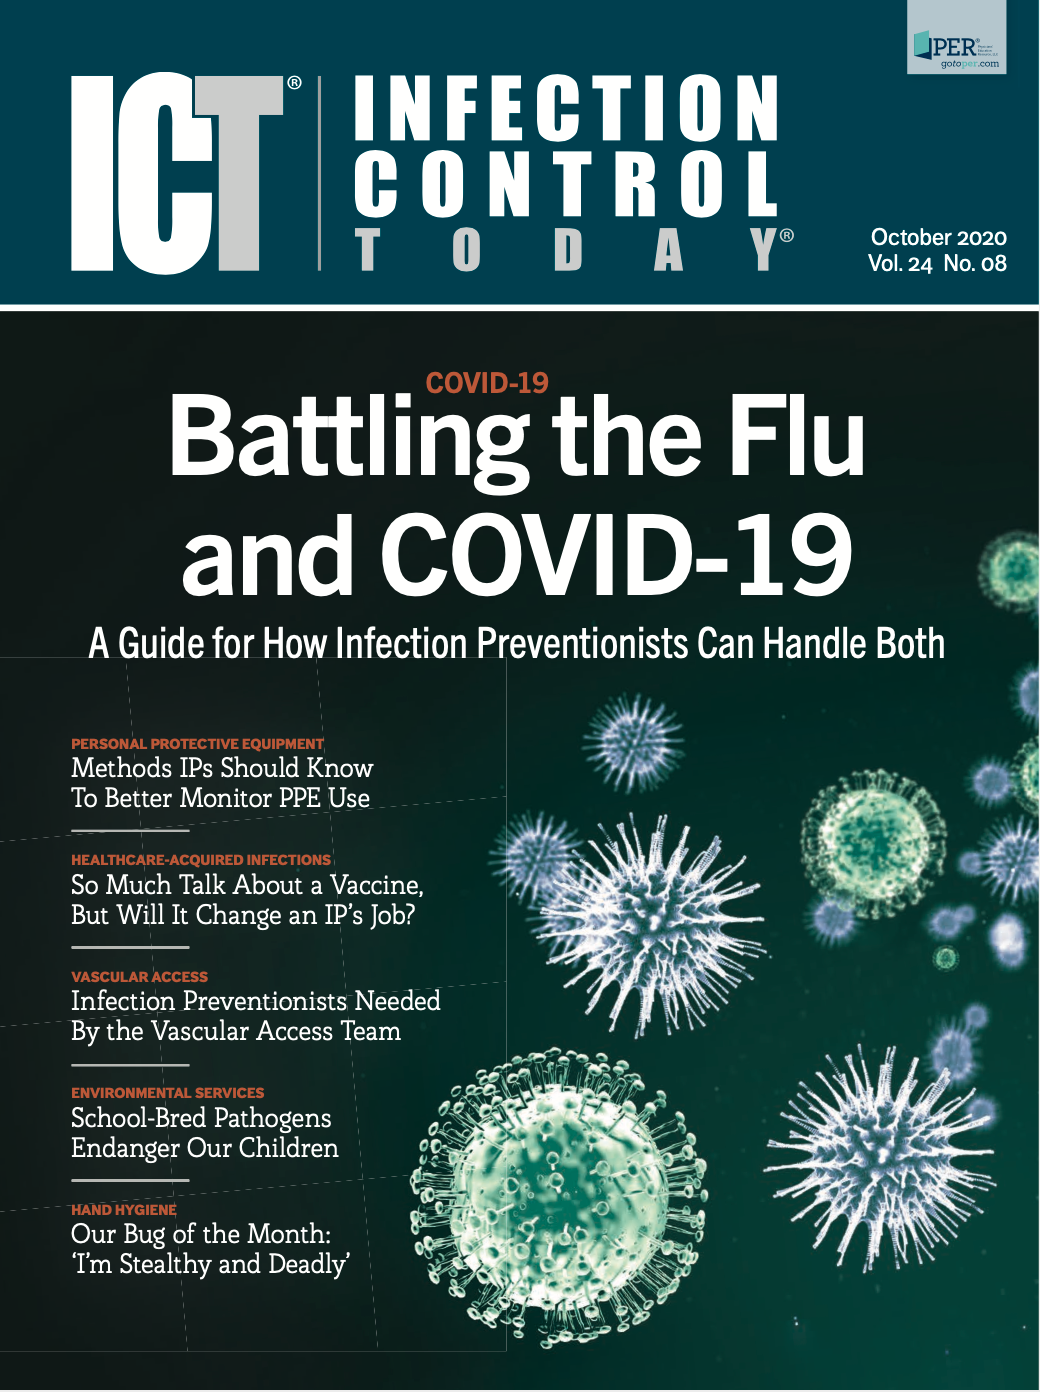 Infection Control Today, October 2020 (Vol. 24 No. 08)